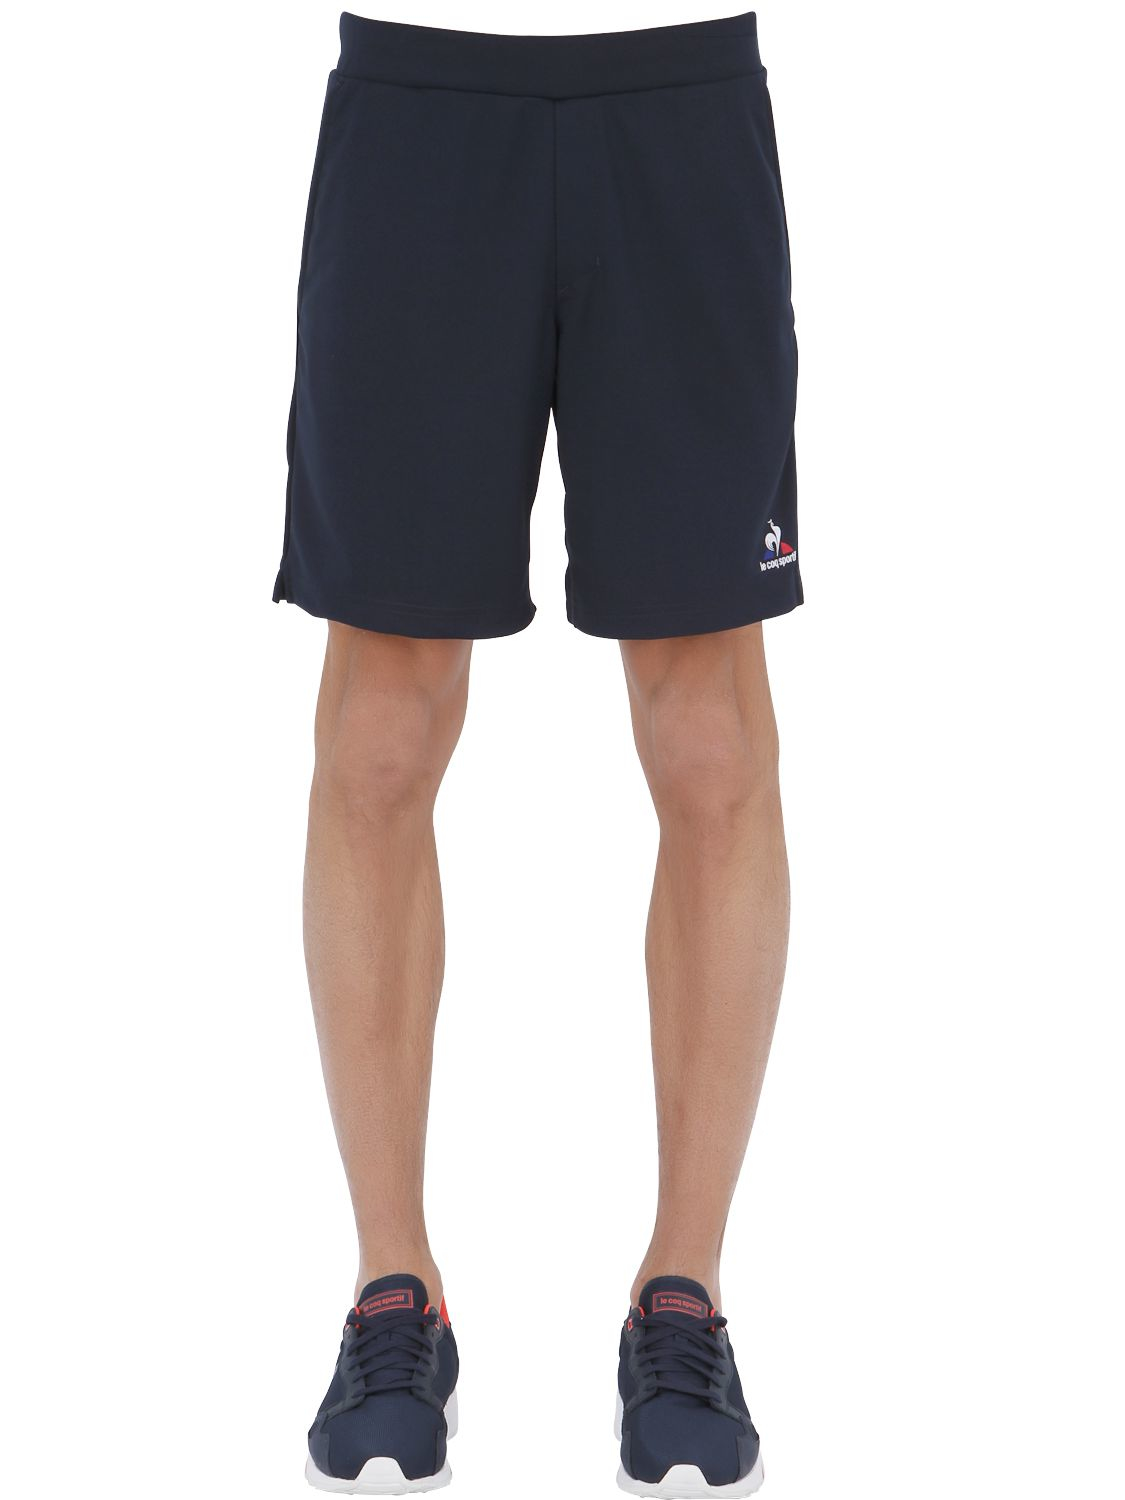 Le Coq Sportif Richard Gasquet Techno Tennis Shorts In Navy Blue For Men Lyst